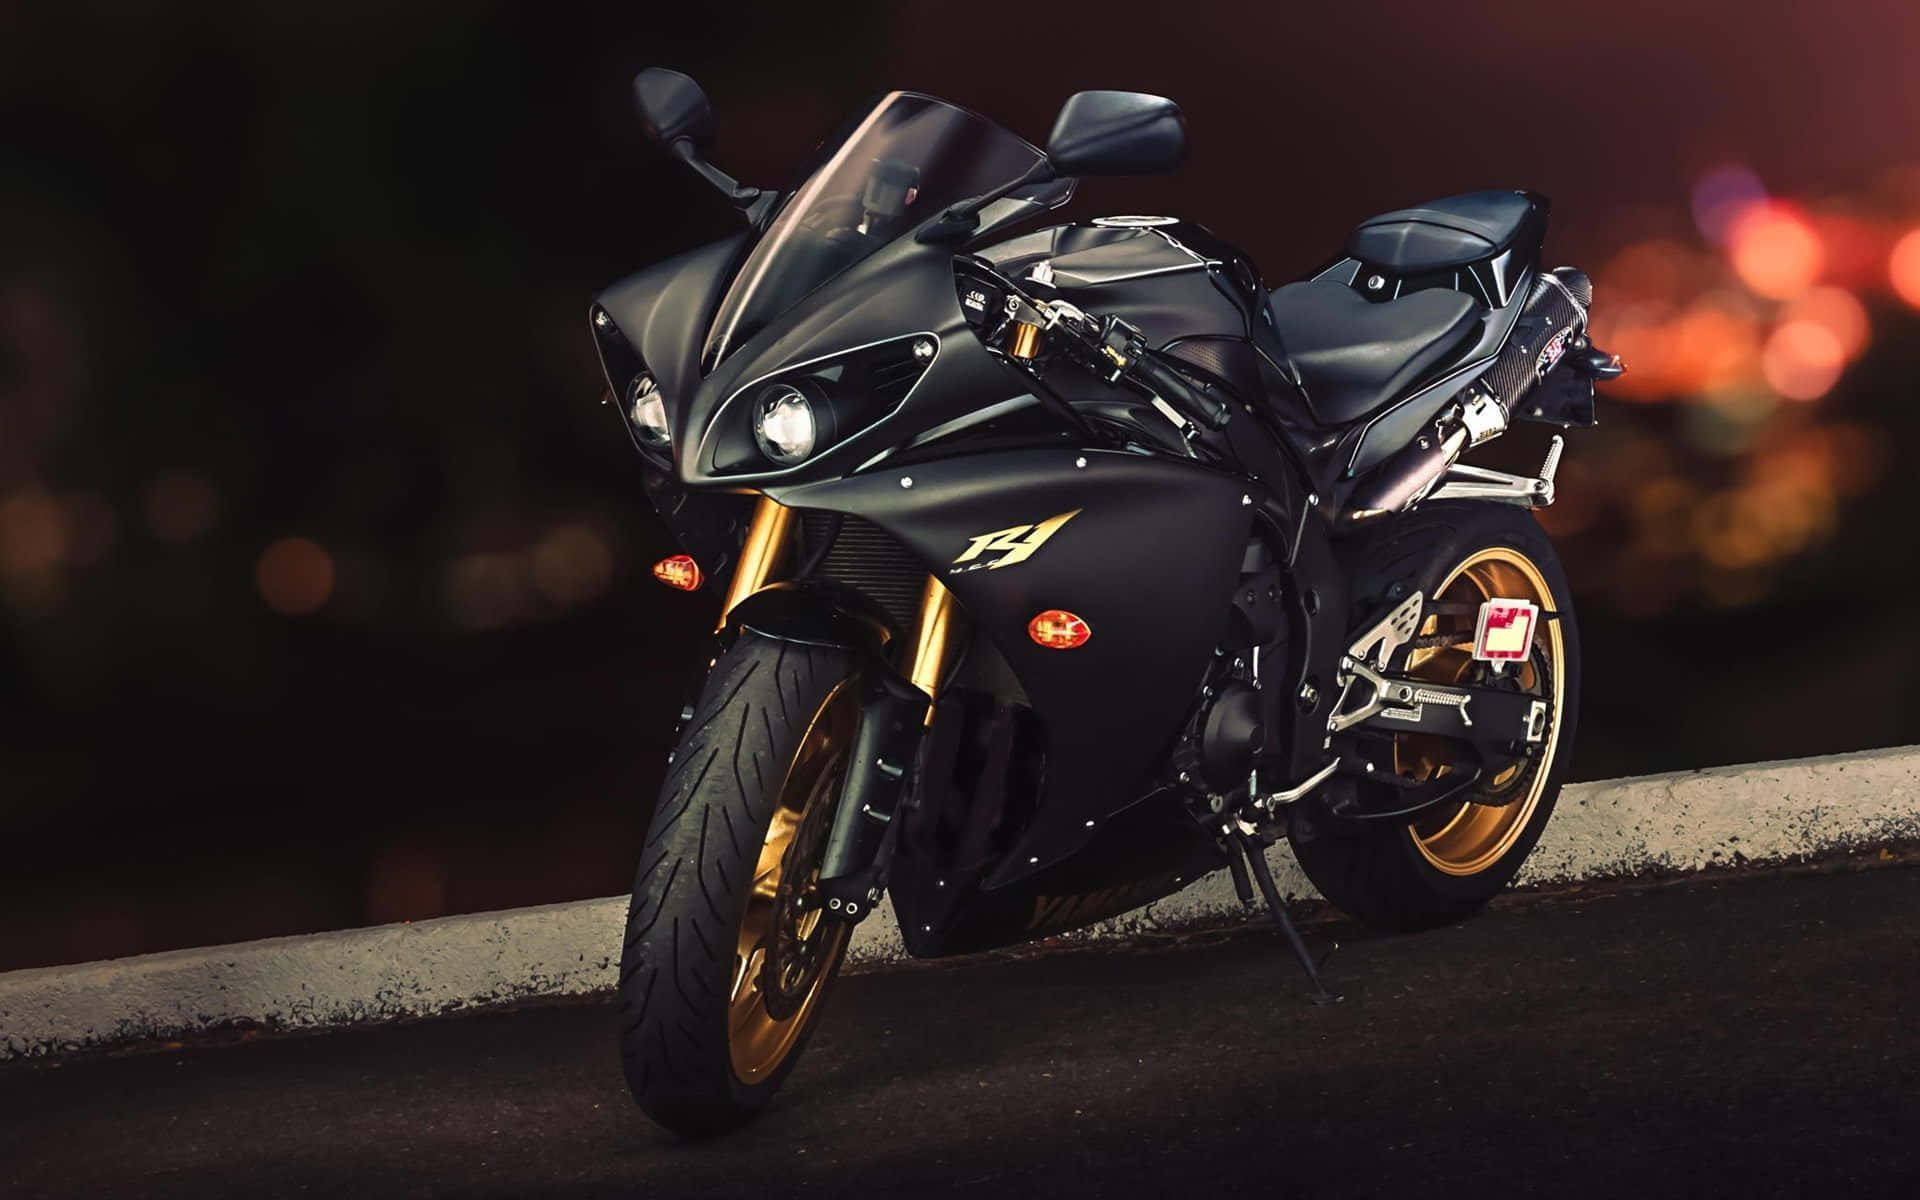 Captivating Yamaha Motorcycle In Full Glory Wallpaper